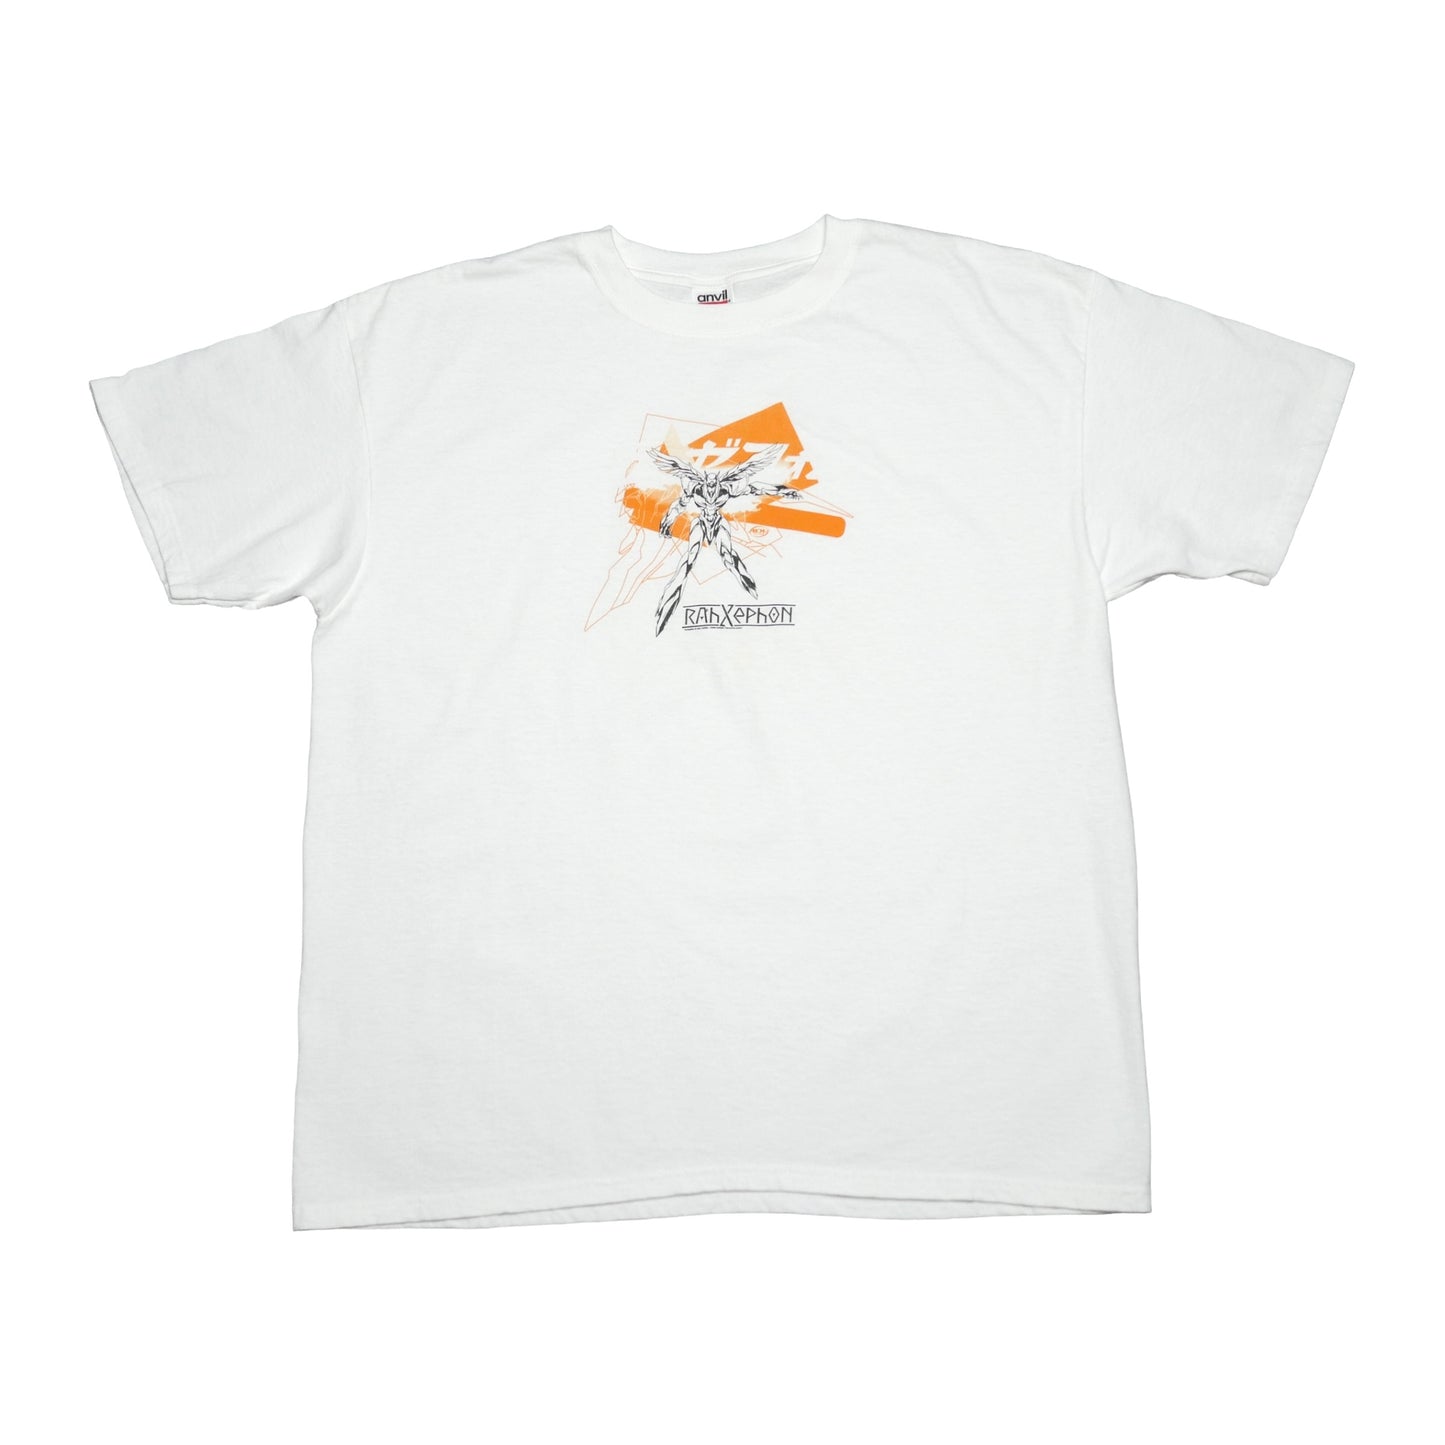 Rahxephon Anime Shirt - XL